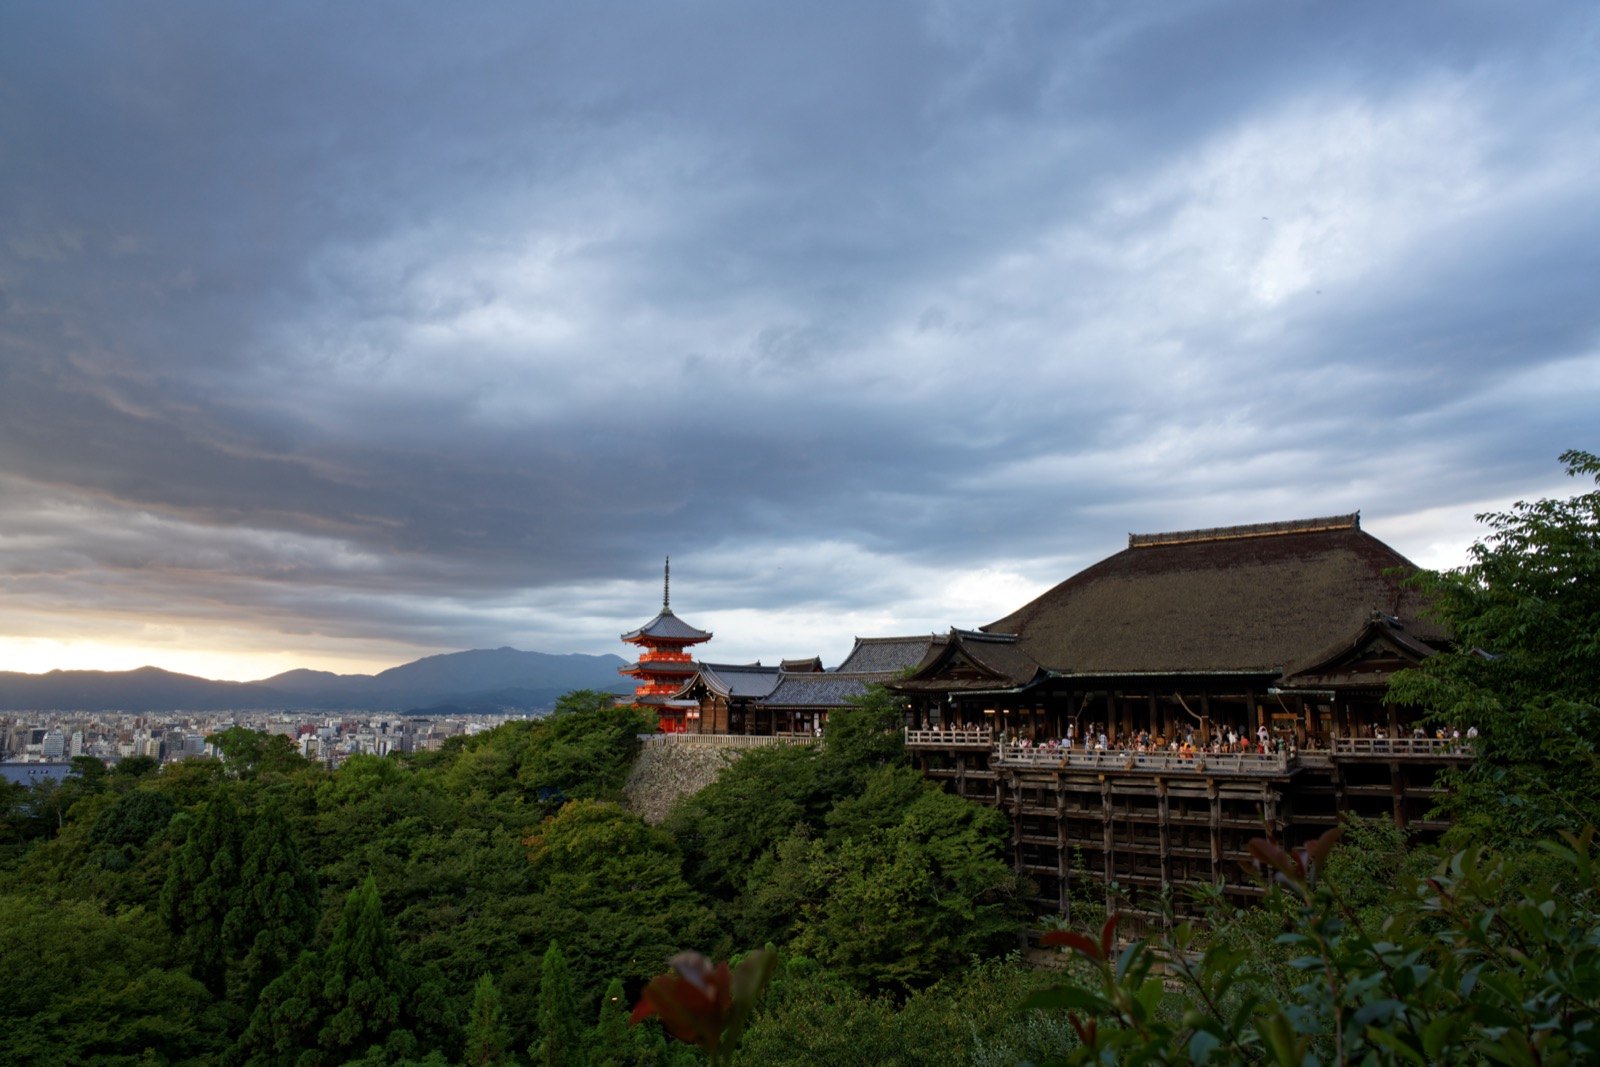 Photo of Kiyomizudera Temple, Japan (2016-08-25 17.36.38 by pang yu liu)